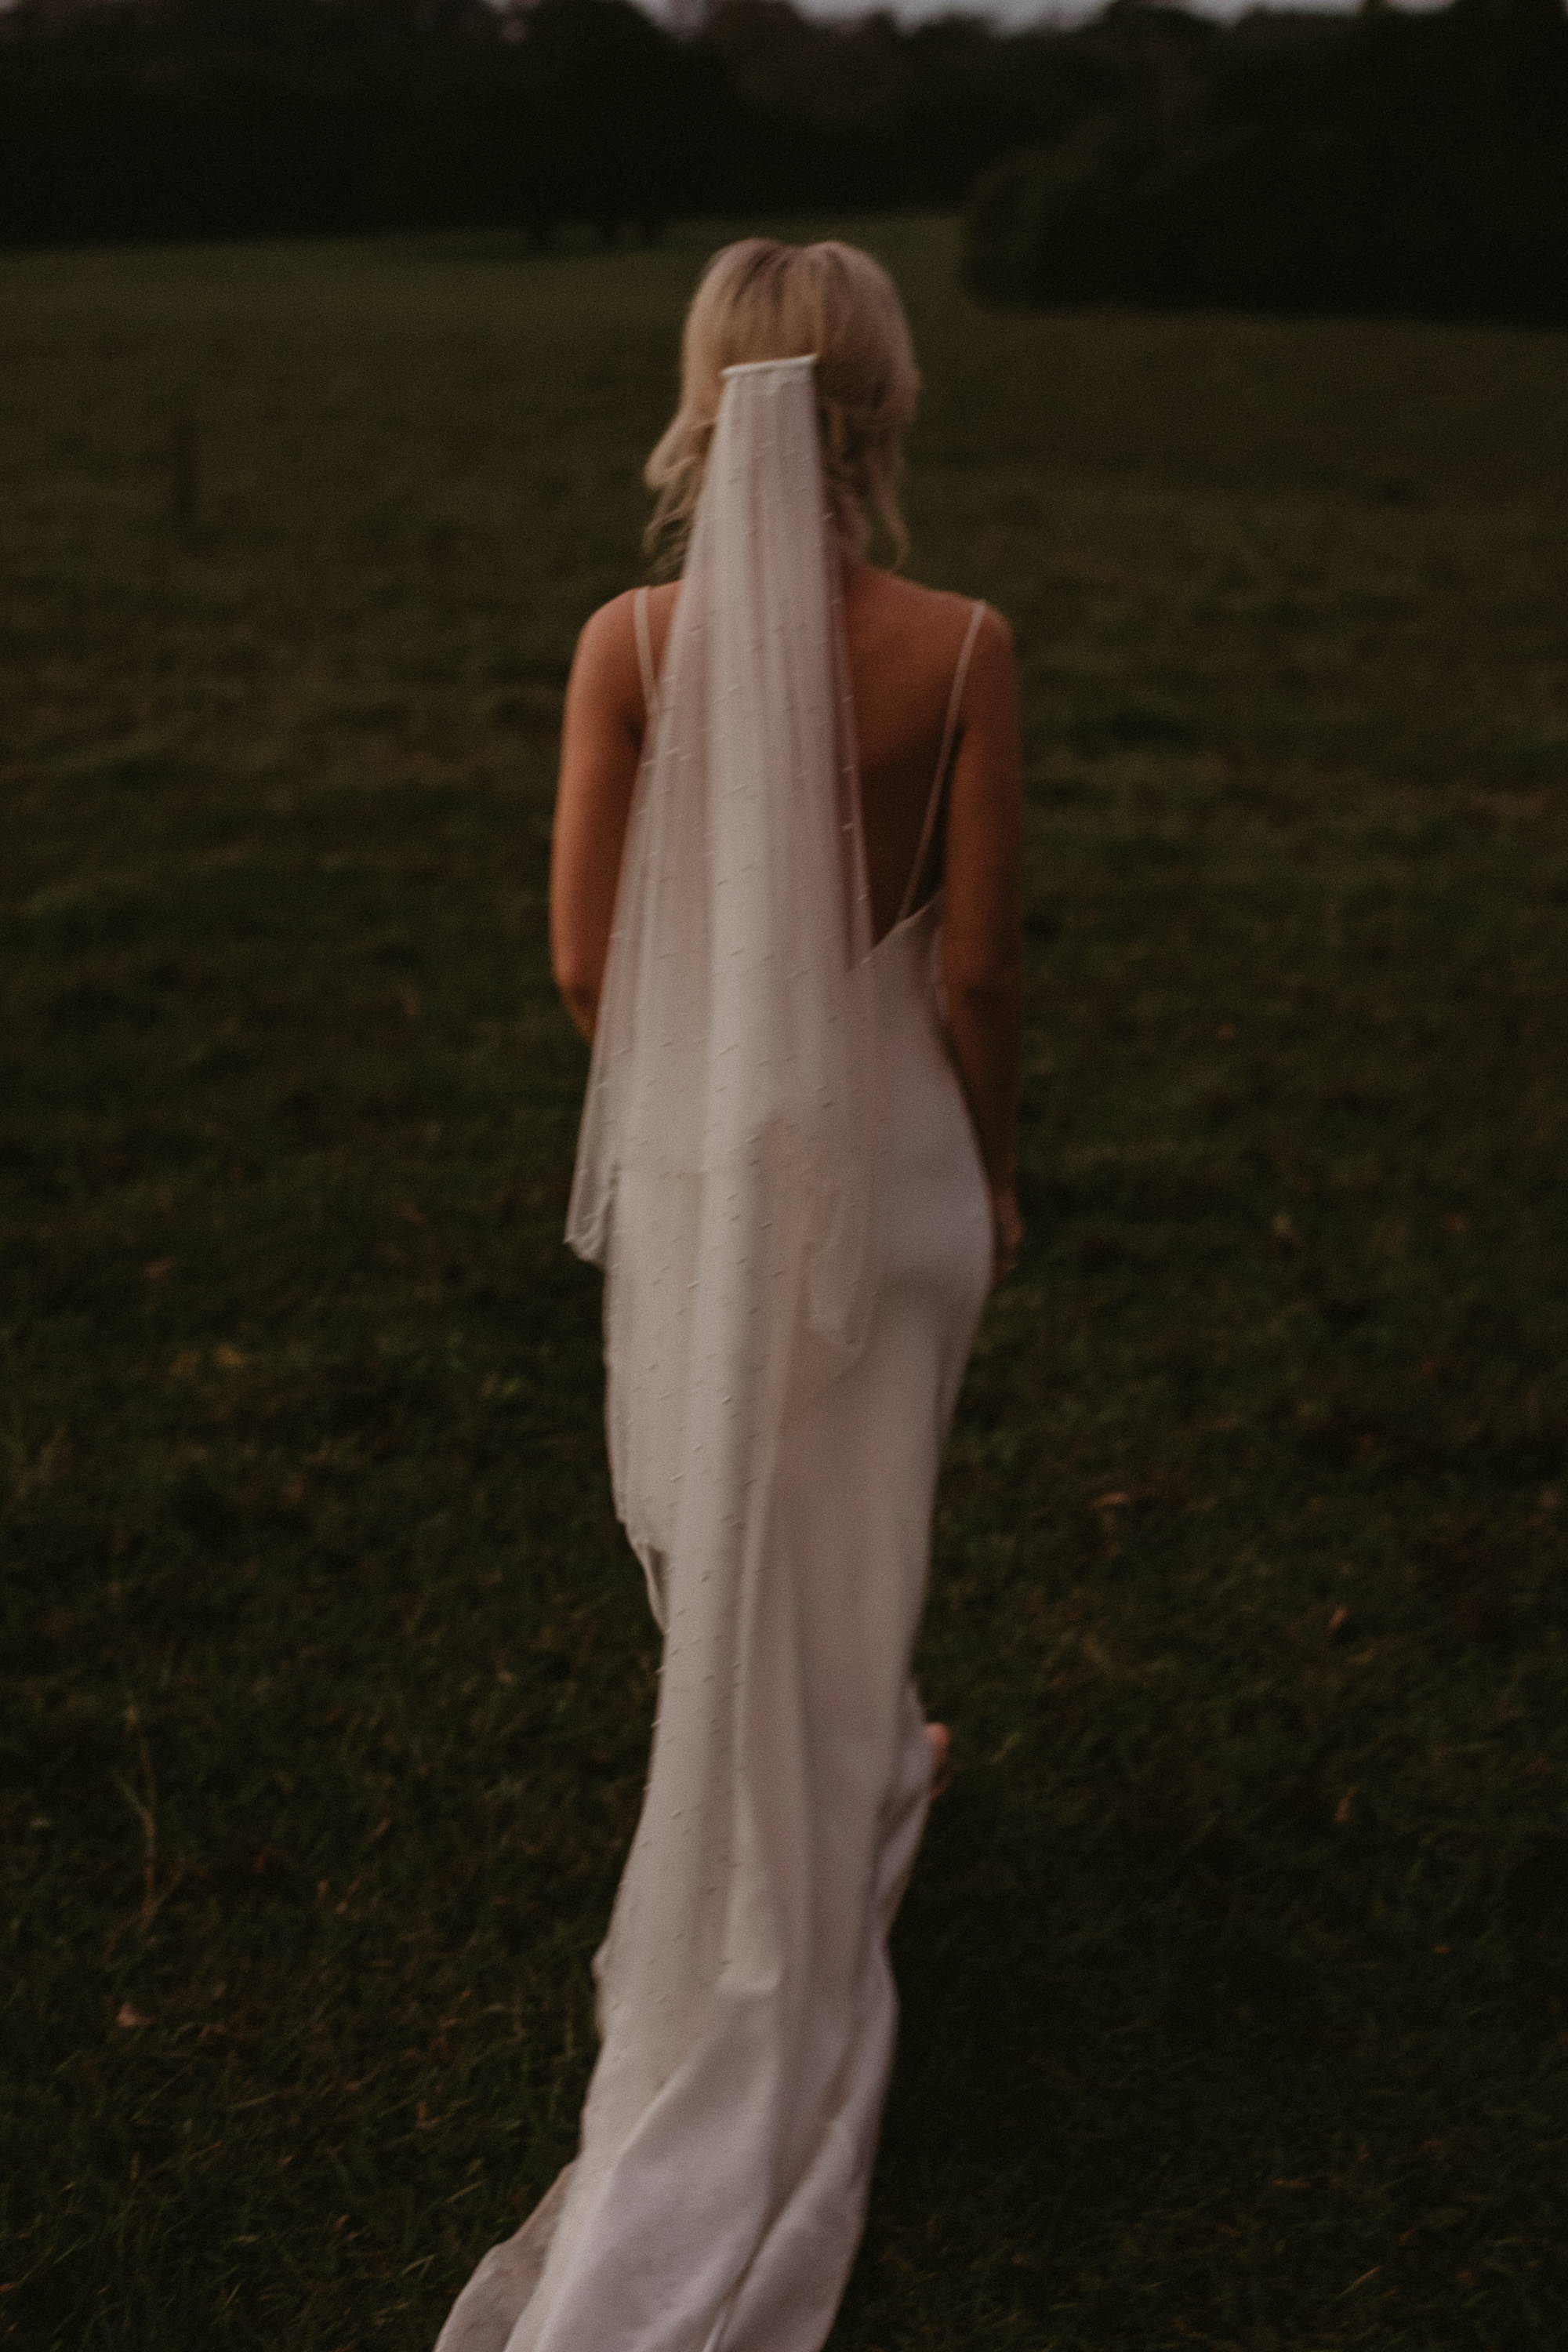 Bride wearing a peal long tulle veil in a grass field